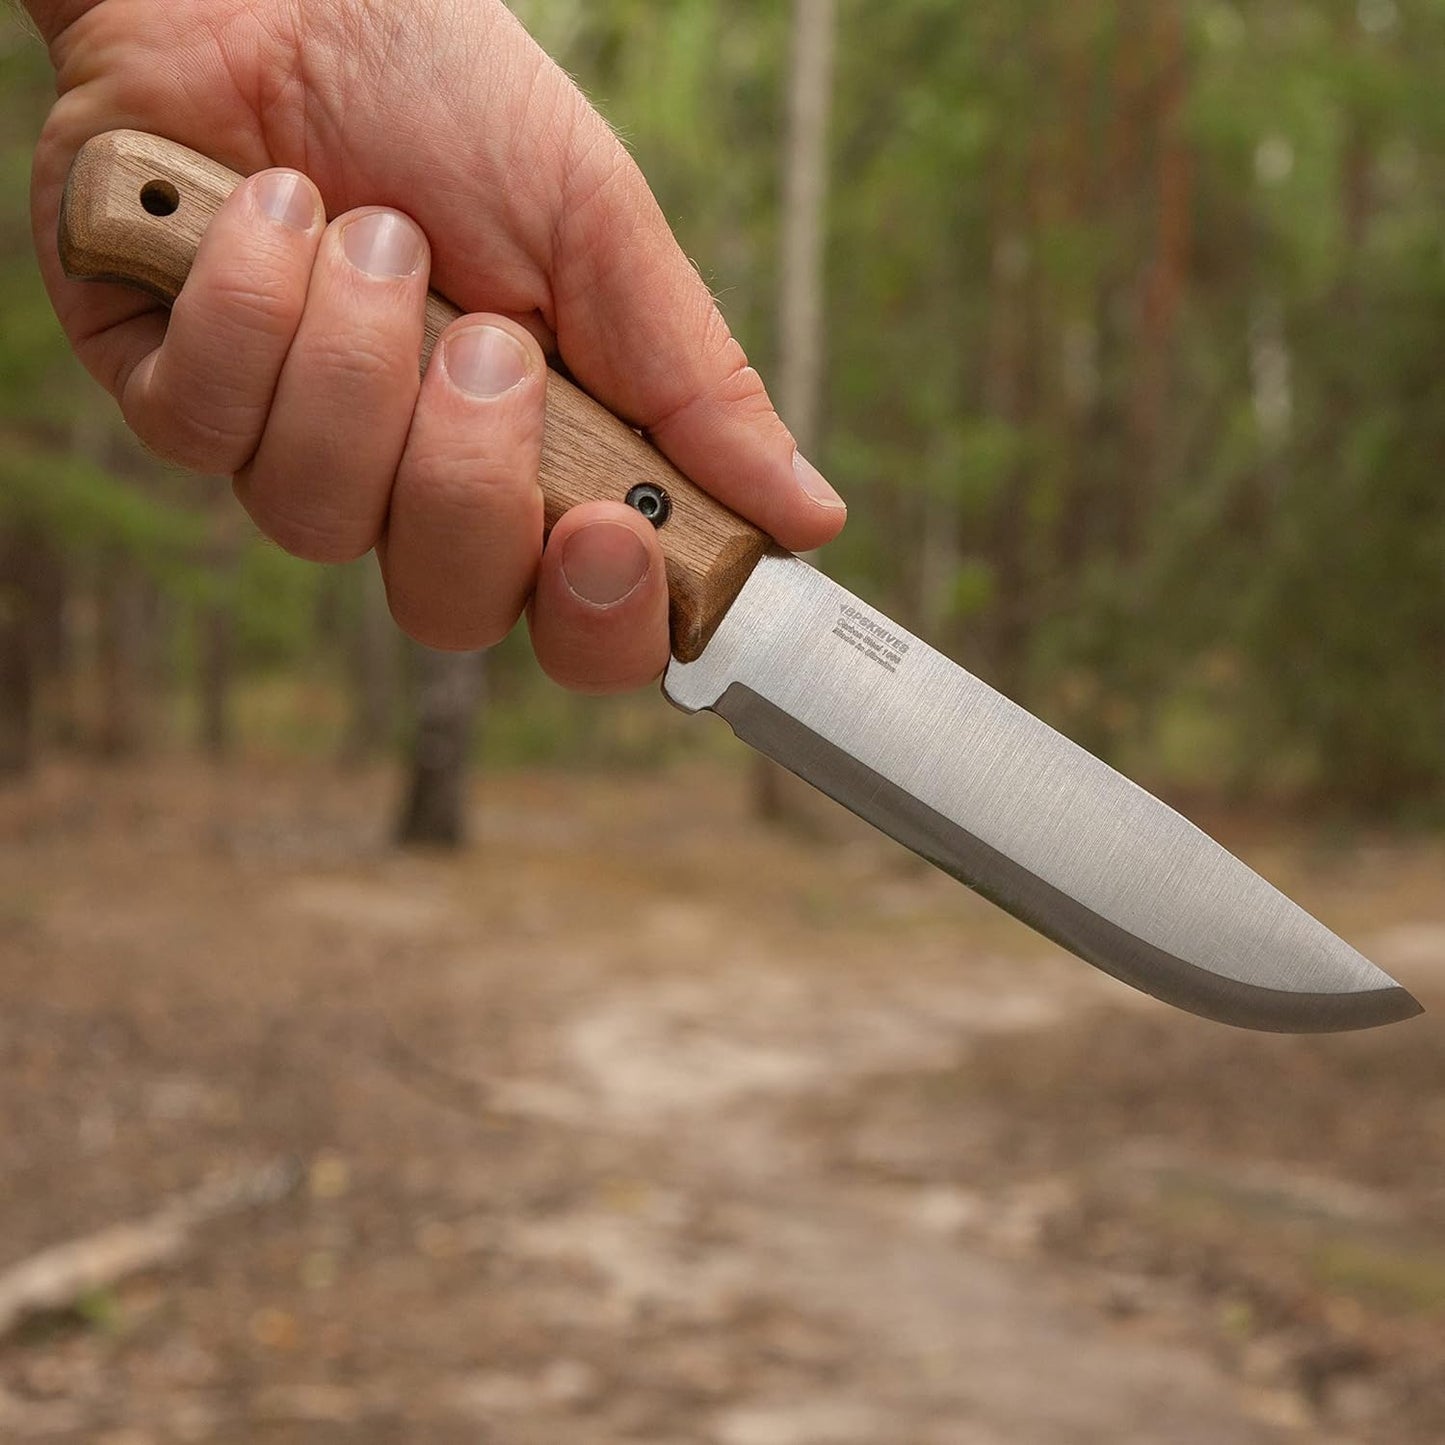 KD Hunting Knife Bushcraft Knife with Leather Sheath and Firestarter